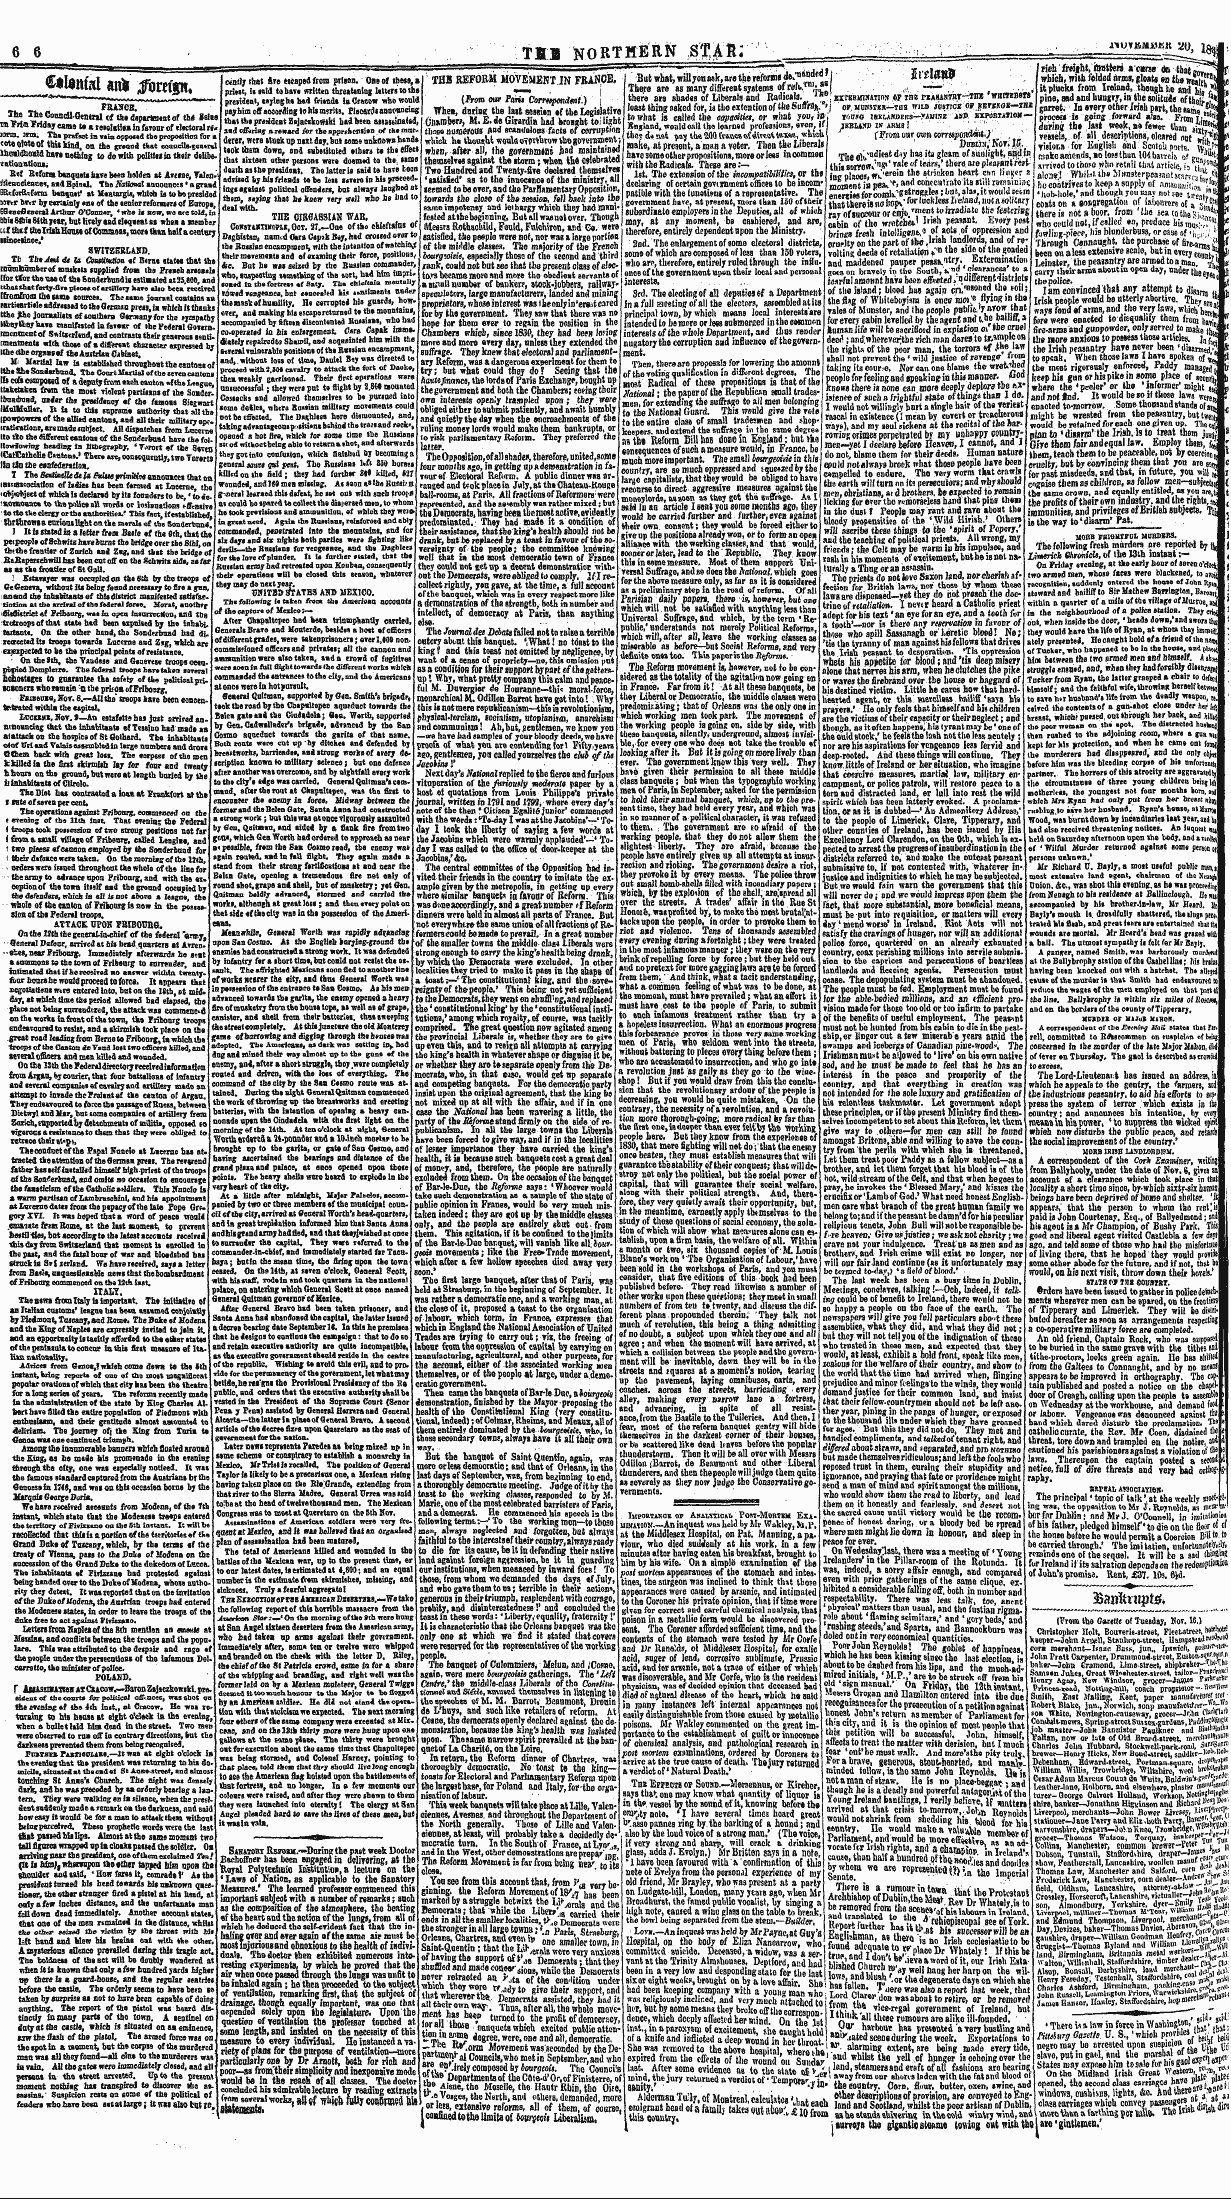 Northern Star (1837-1852): jS F Y, 3rd edition: 6